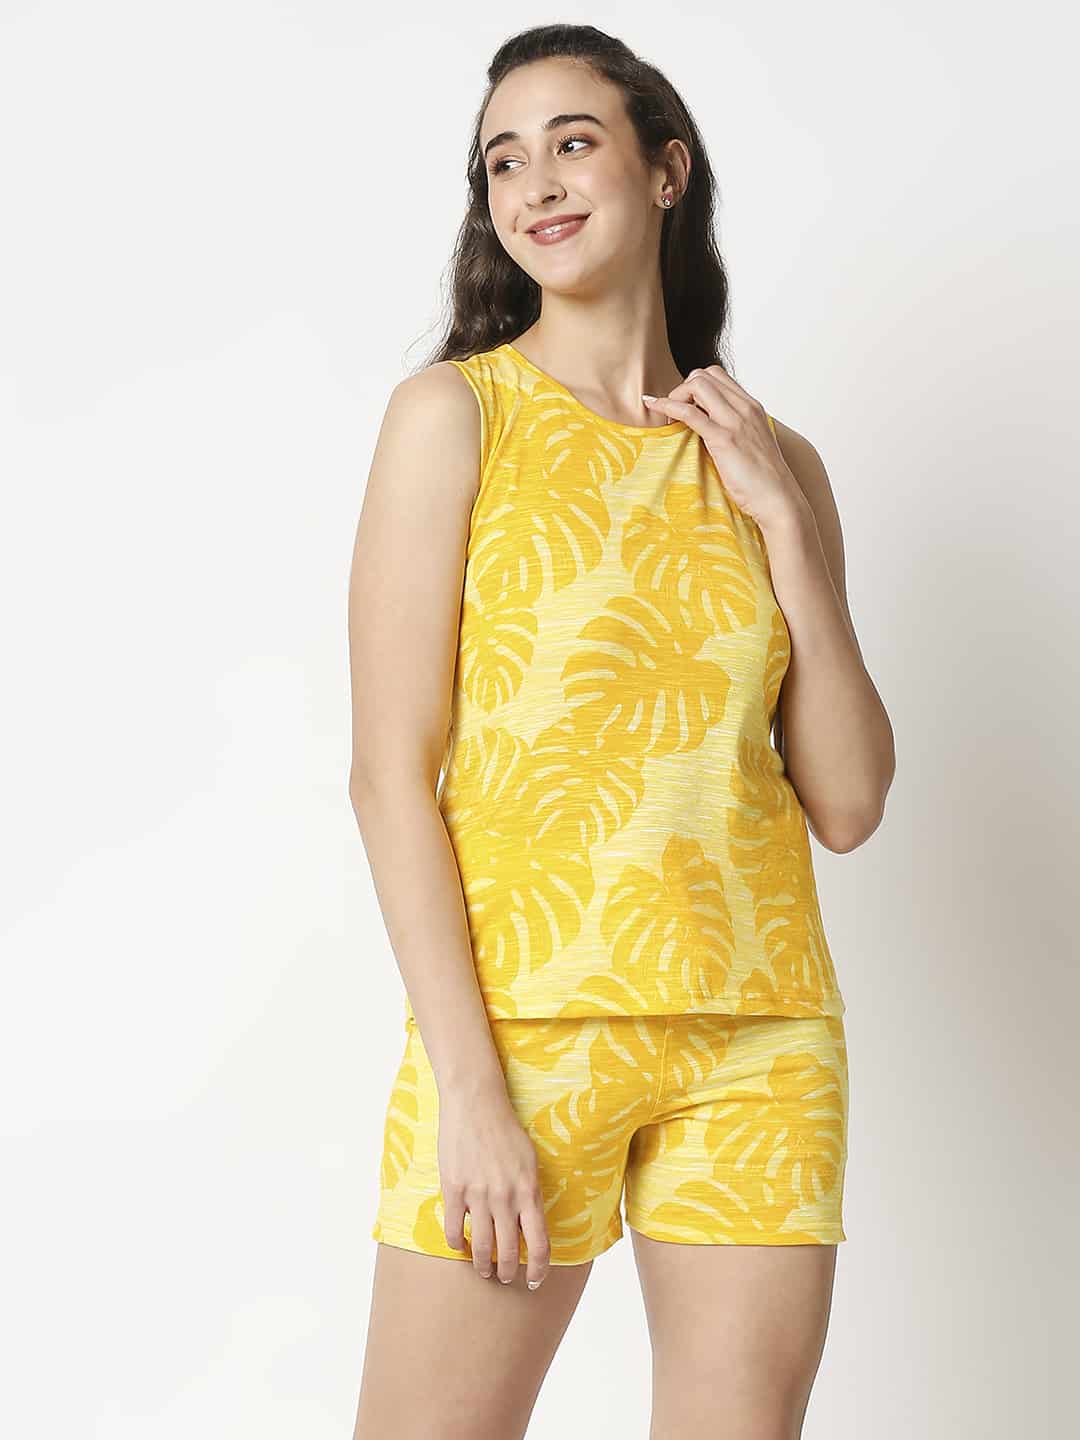 The Manaca Tank Top Short Set Nightwear - Yellow